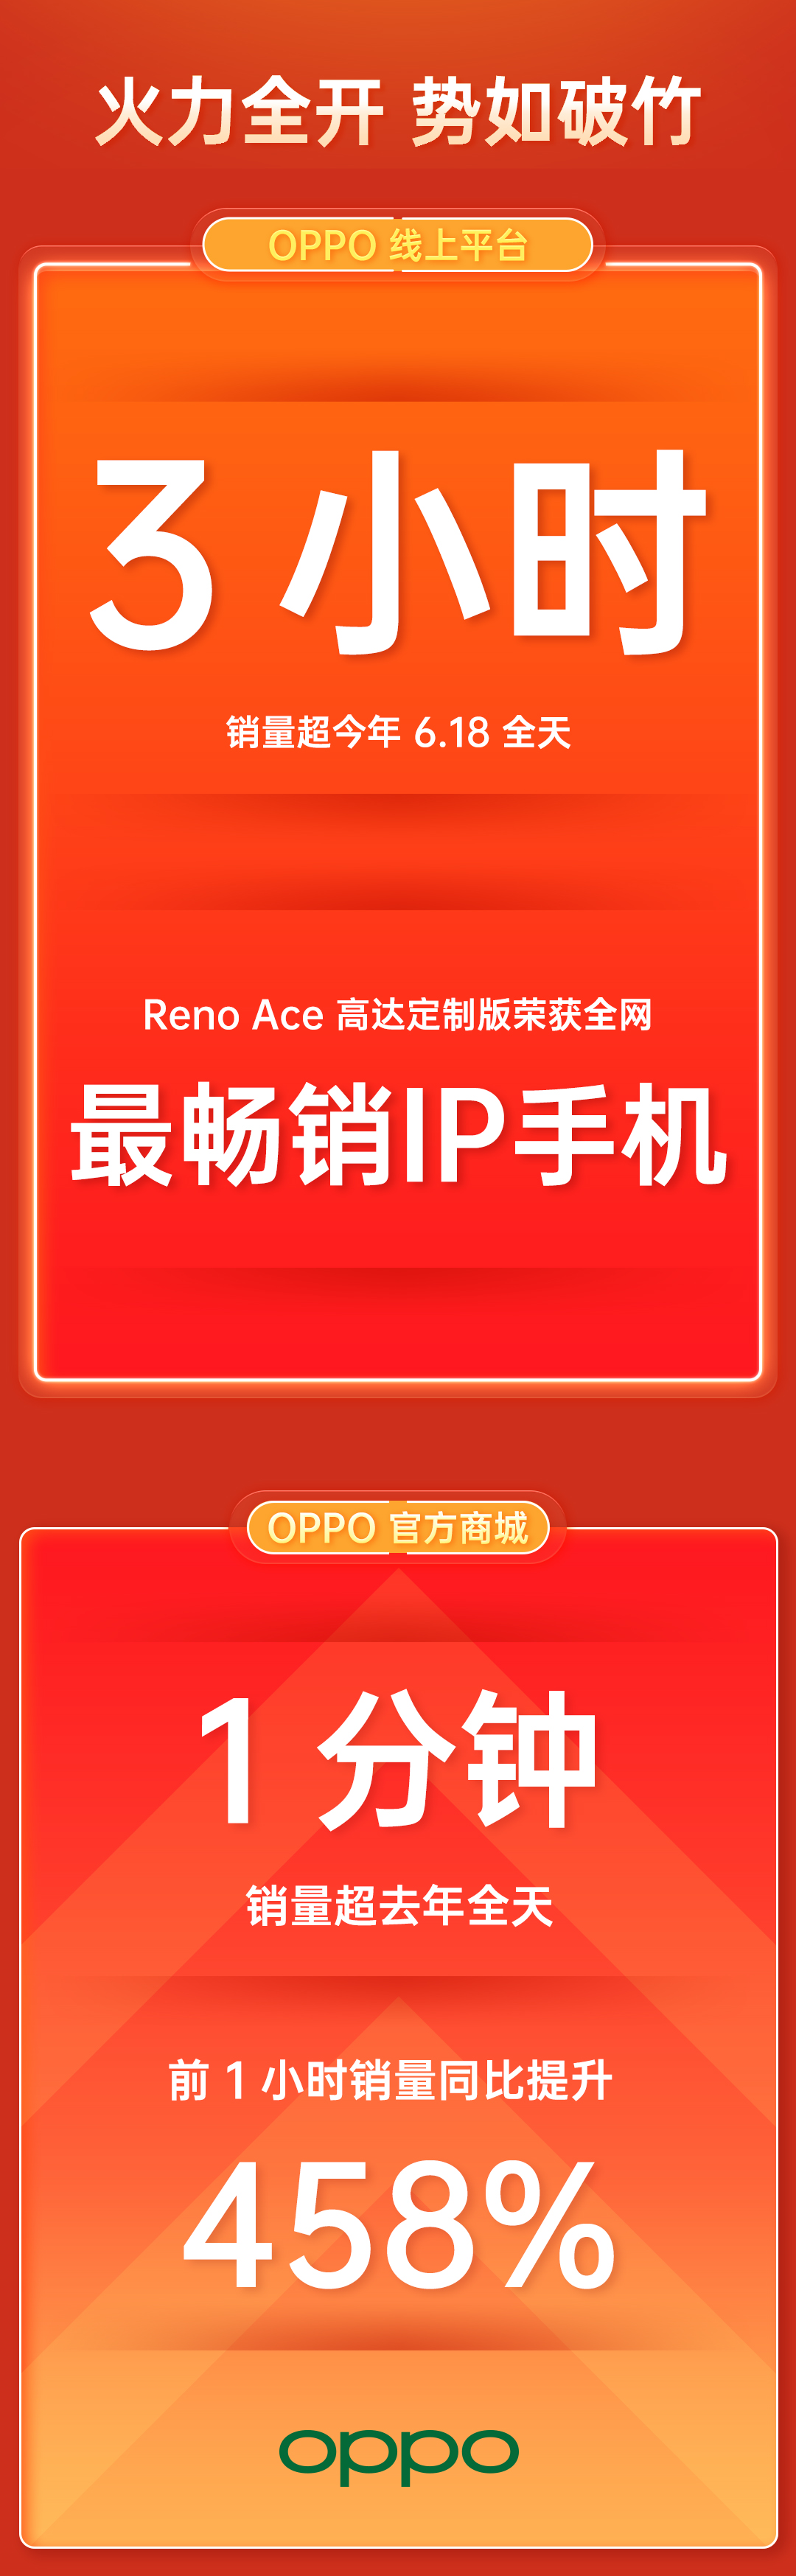 OPPO线上3小时销量超618全天 Reno Ace成最畅销IP手机